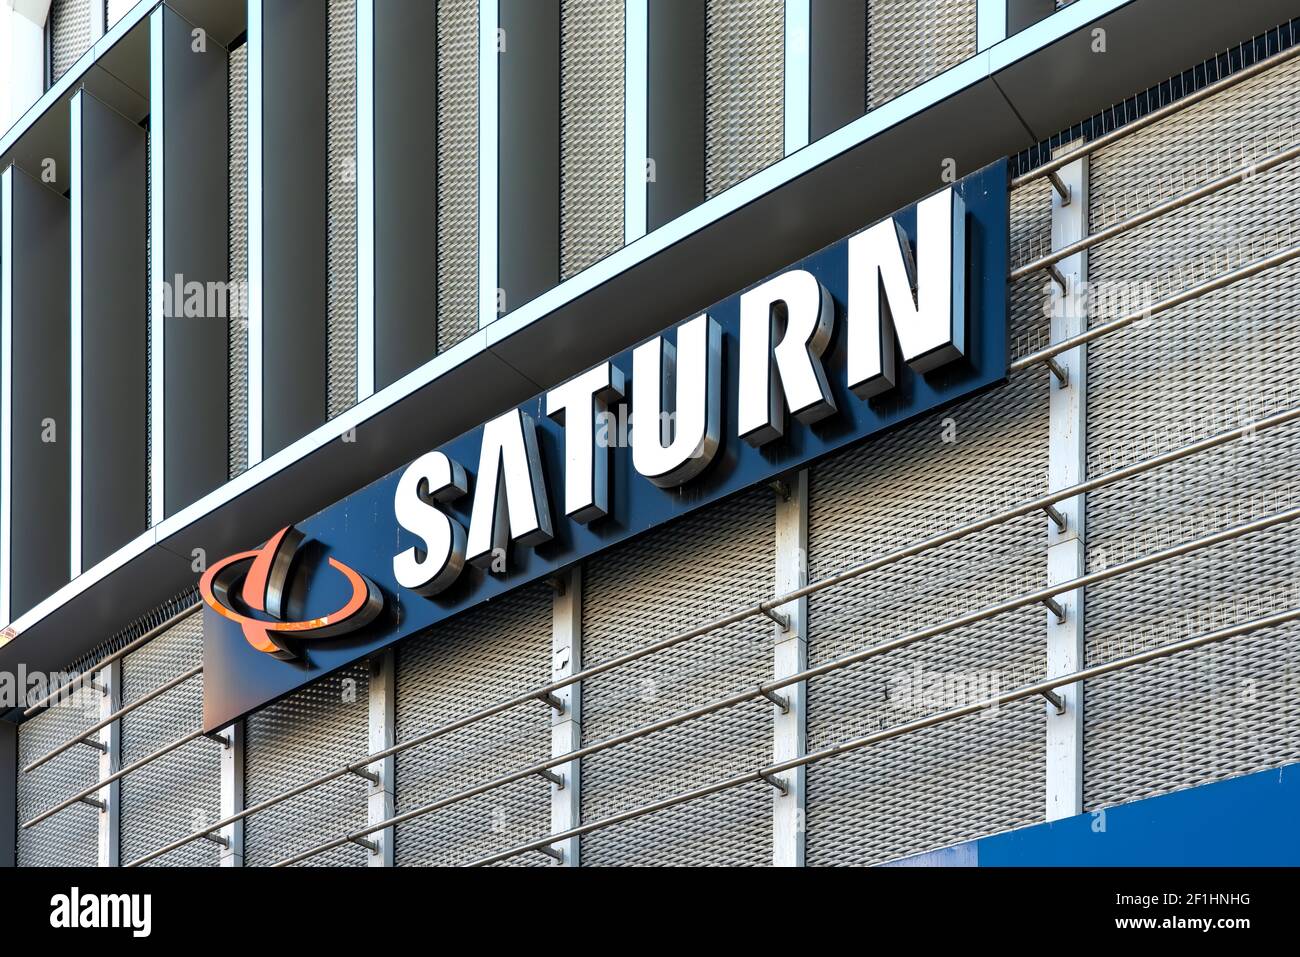 Saturn Logo on Aluminum Mesh Expanded Lattice Building Facade in Frankfurt am Main Stock Photo